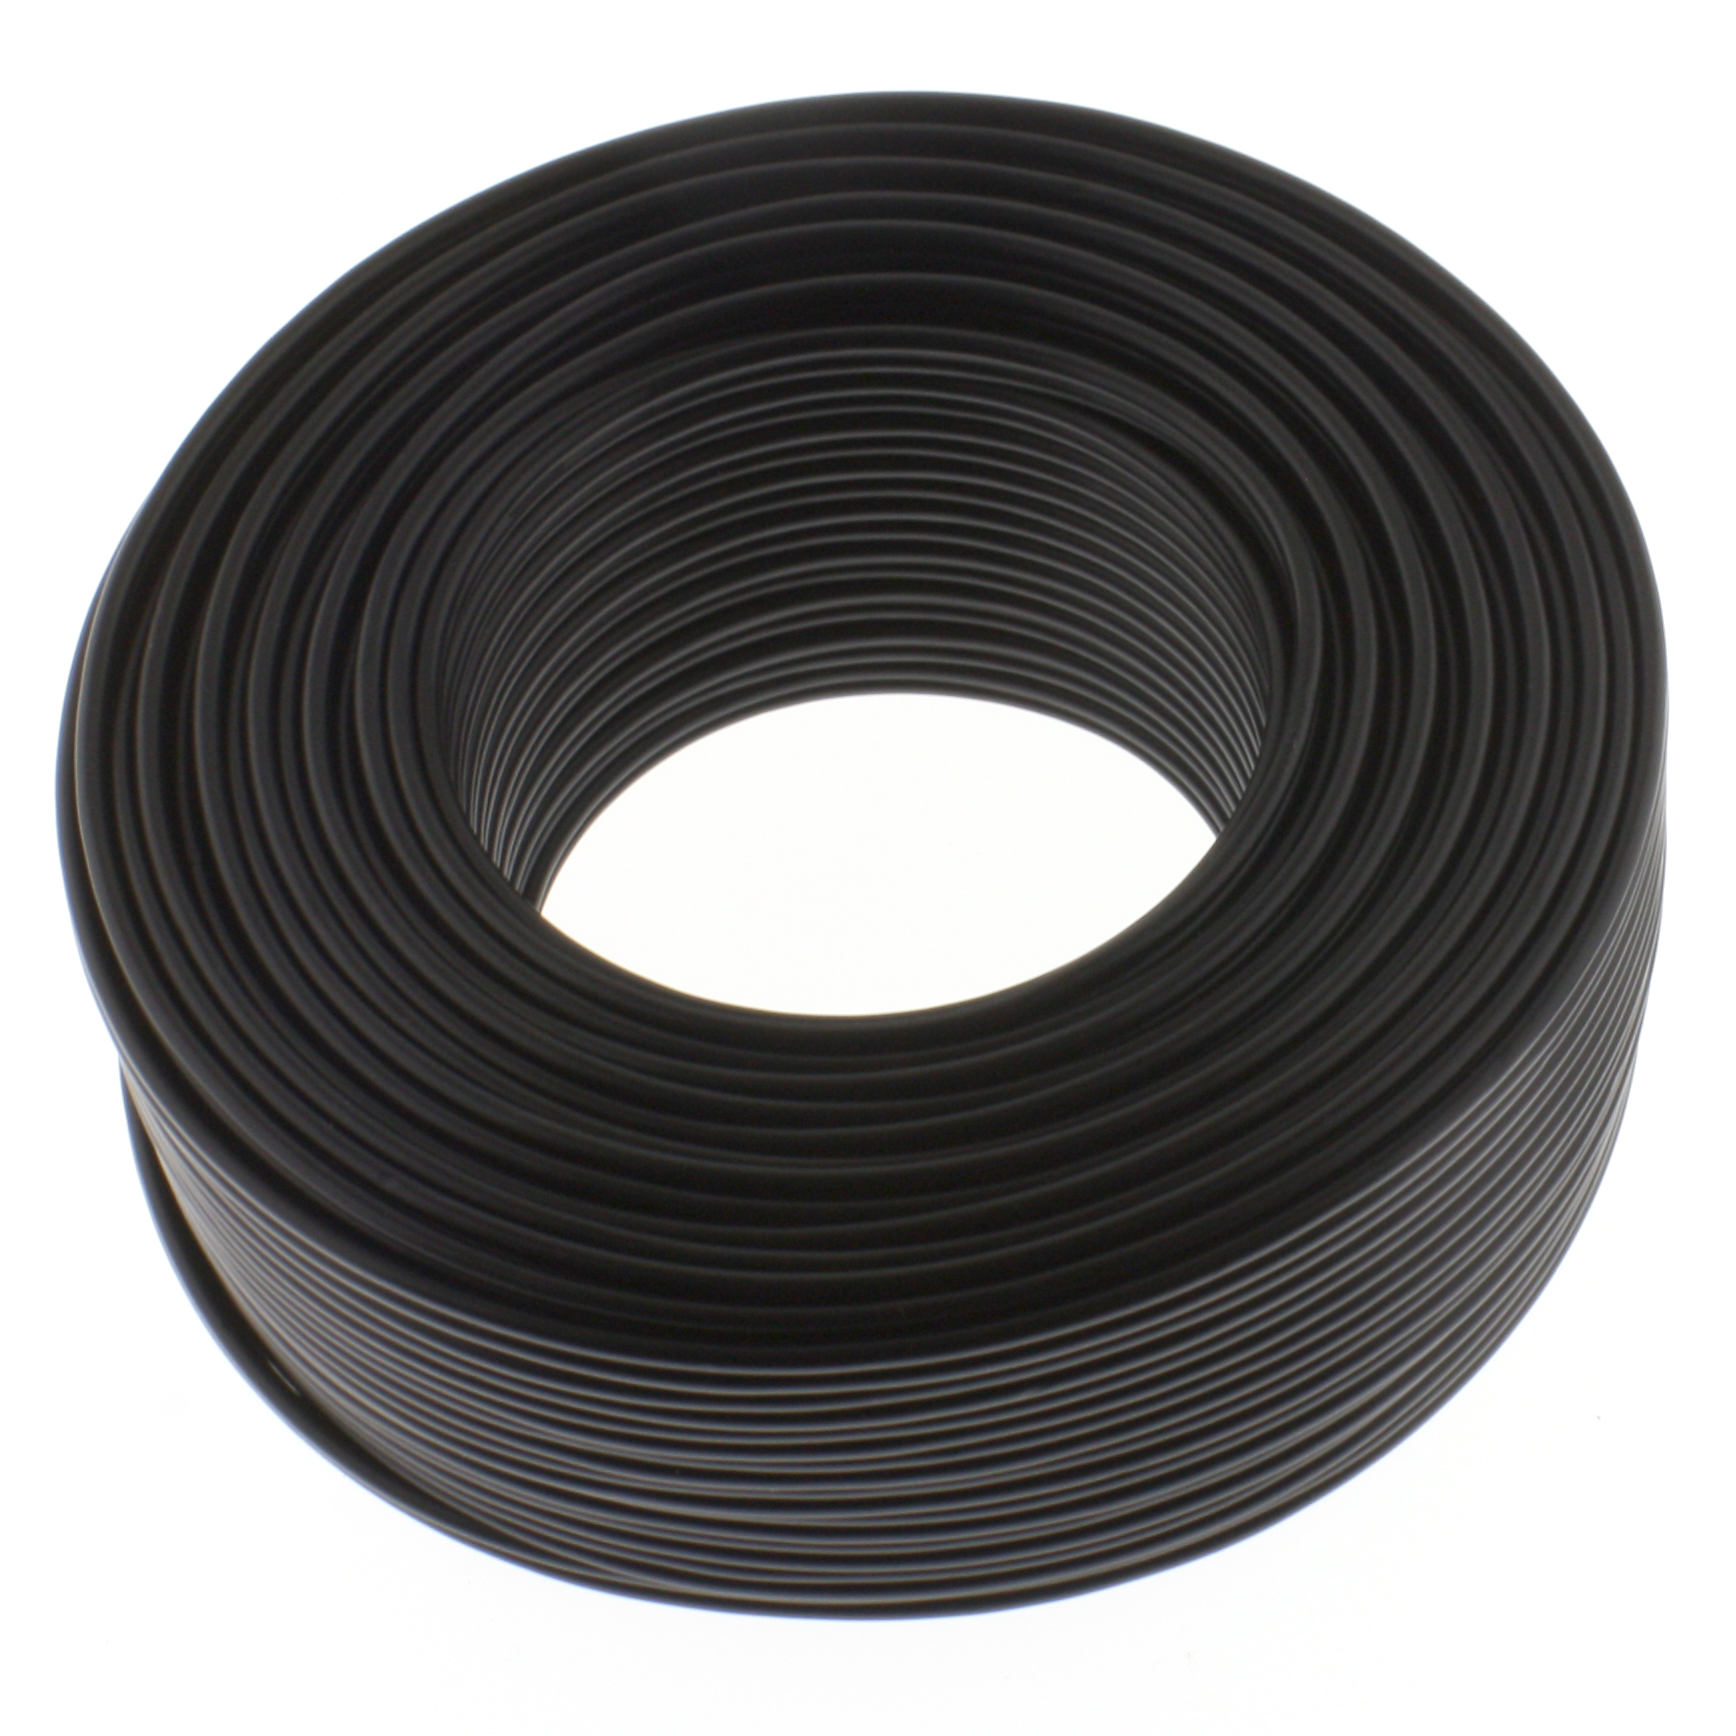 Loudspeaker cable black 50m 1.50mm